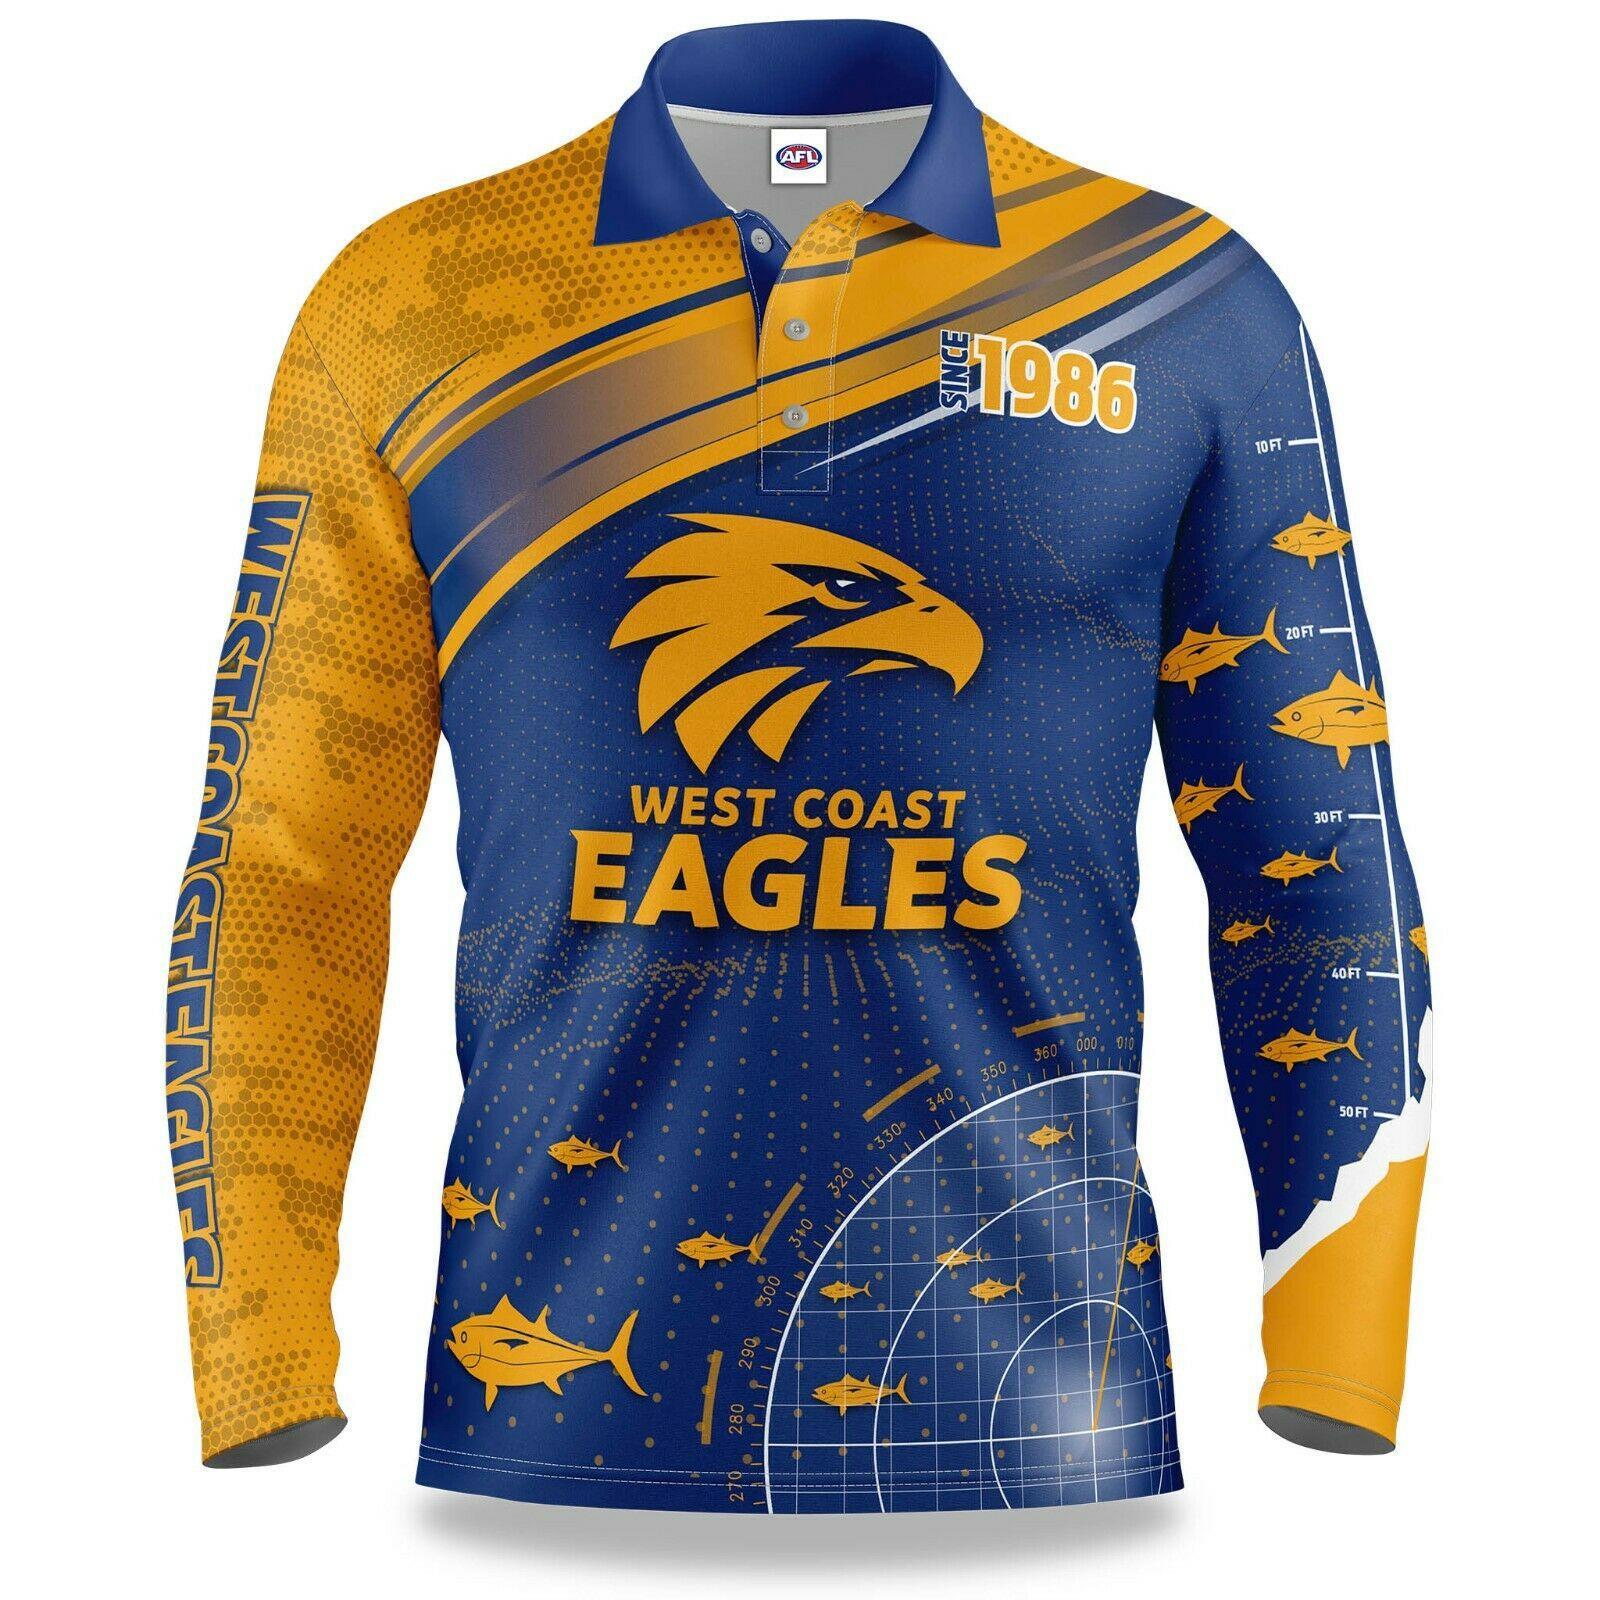 AFL Long Sleeve Fishfinder Fishing Polo Tee Shirt - West Coast Eagles - Adult